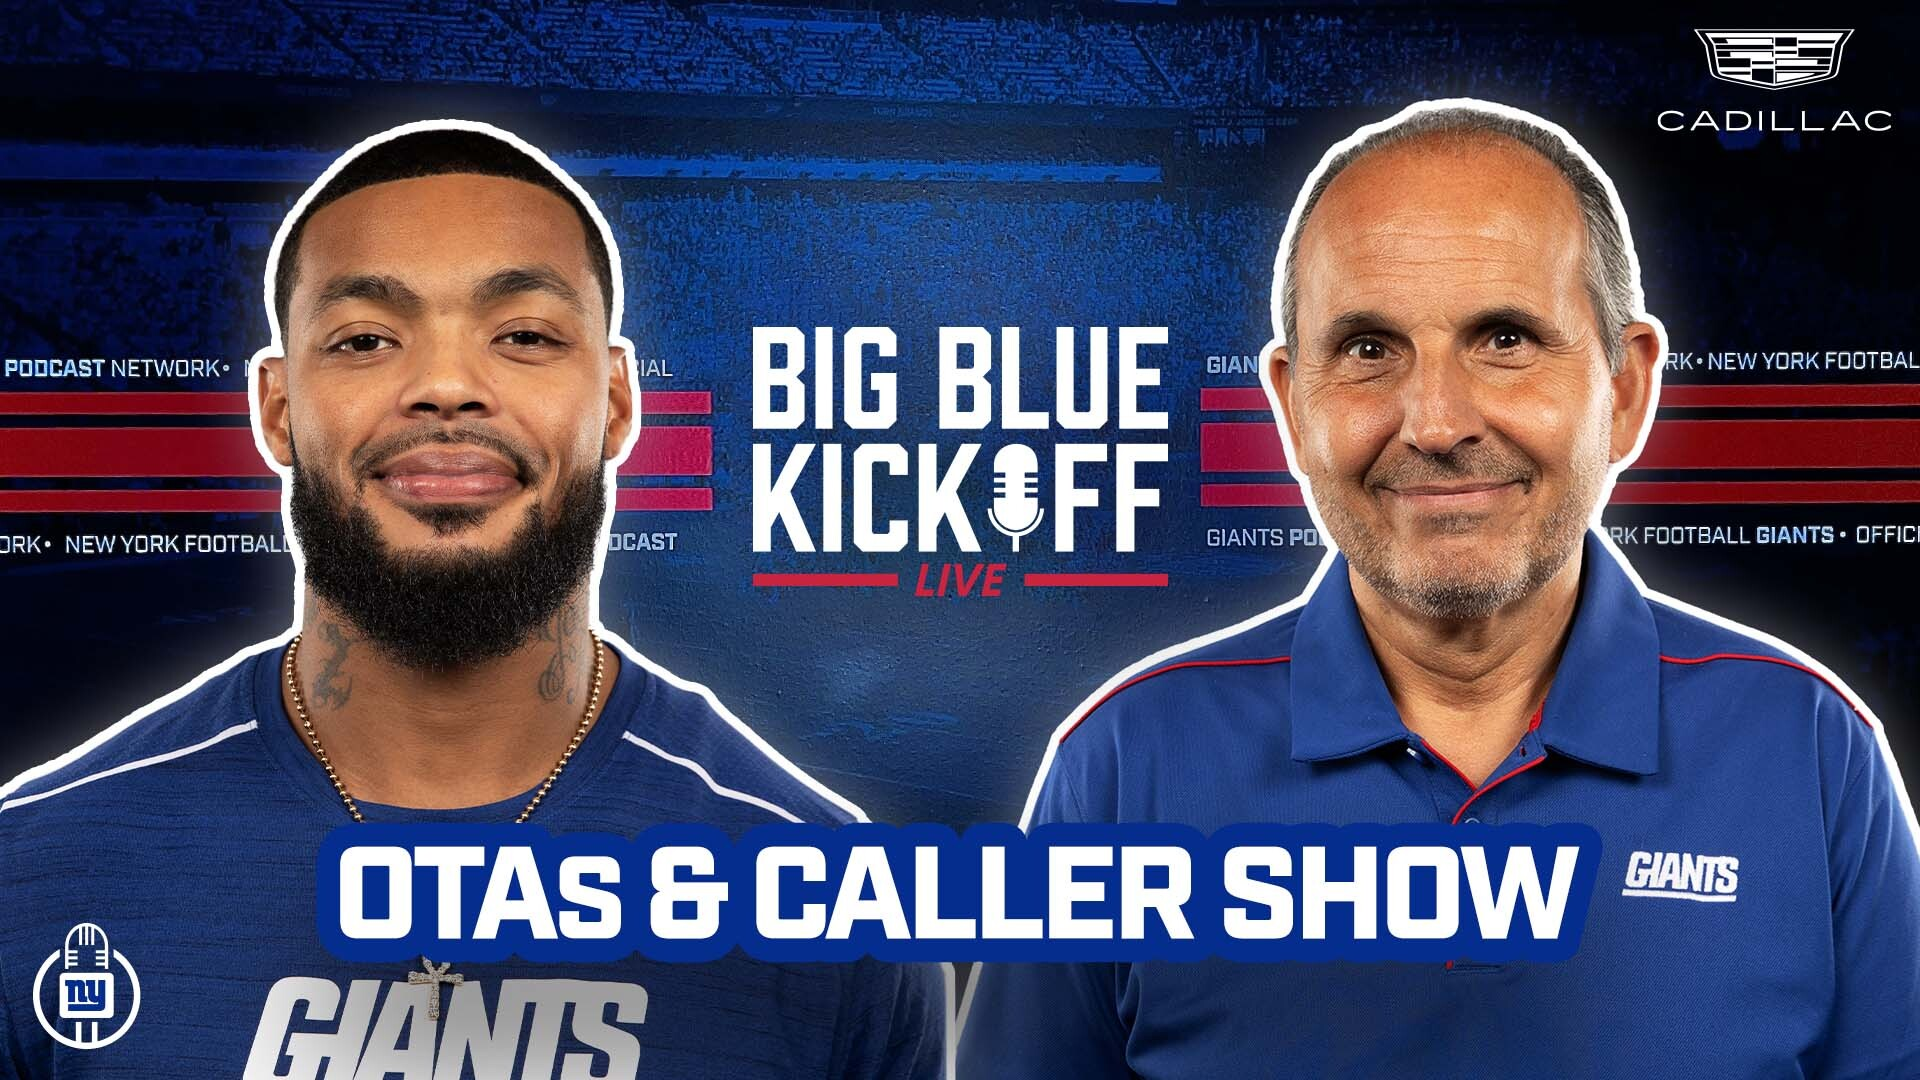 Big Blue Kickoff Live 5/21 | OTAs and Caller Show